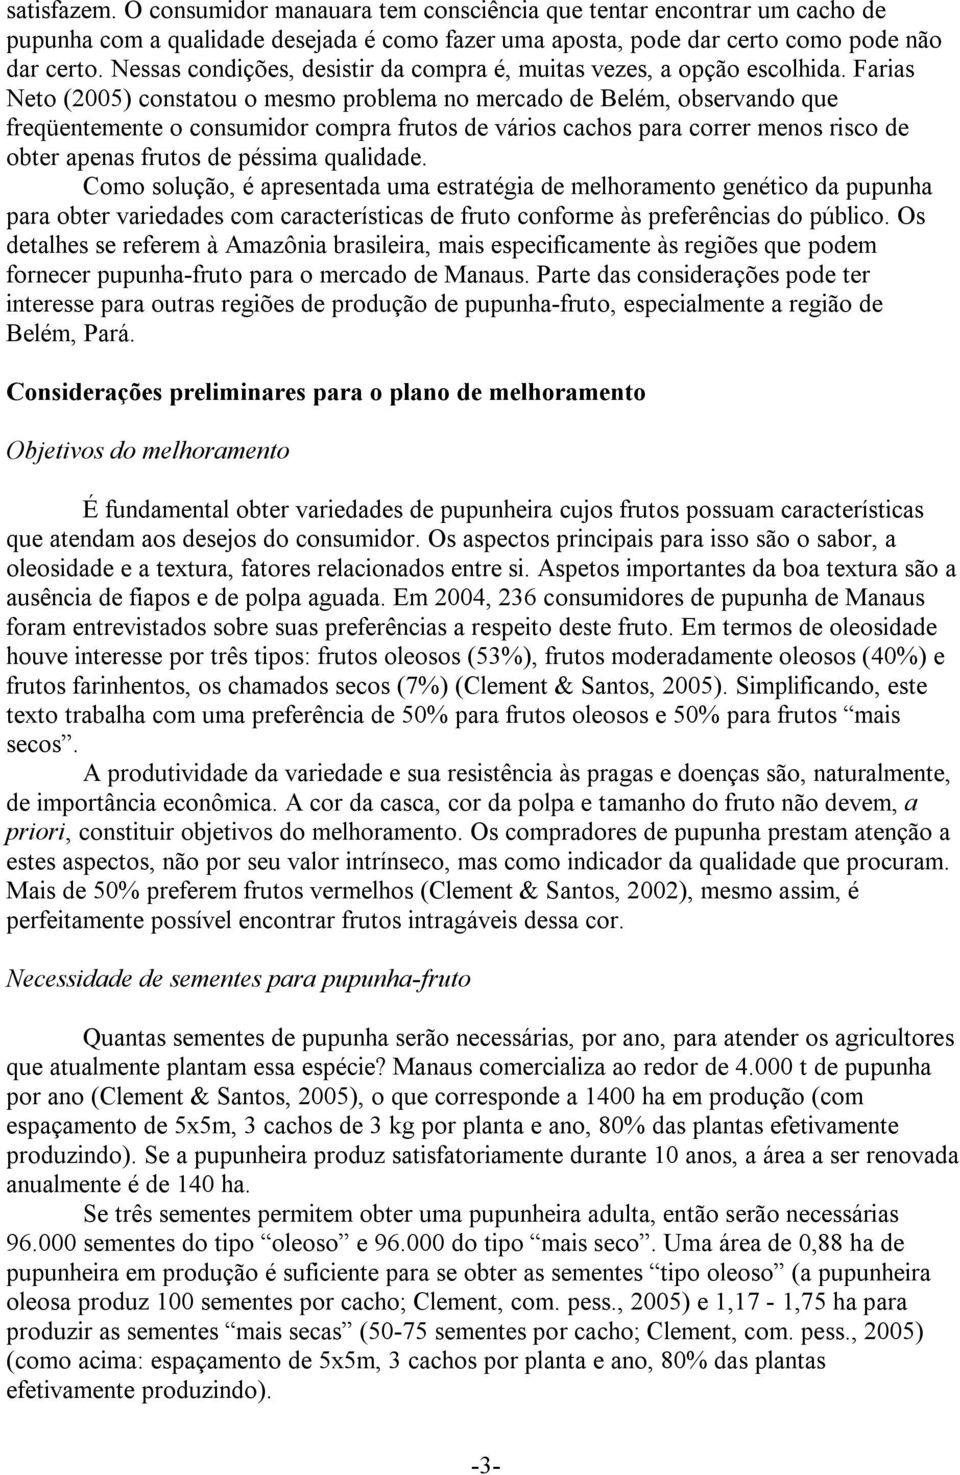 Farias Neto (2005) constatou o mesmo problema no mercado de Belém, observando que freqüentemente o consumidor compra frutos de vários cachos para correr menos risco de obter apenas frutos de péssima